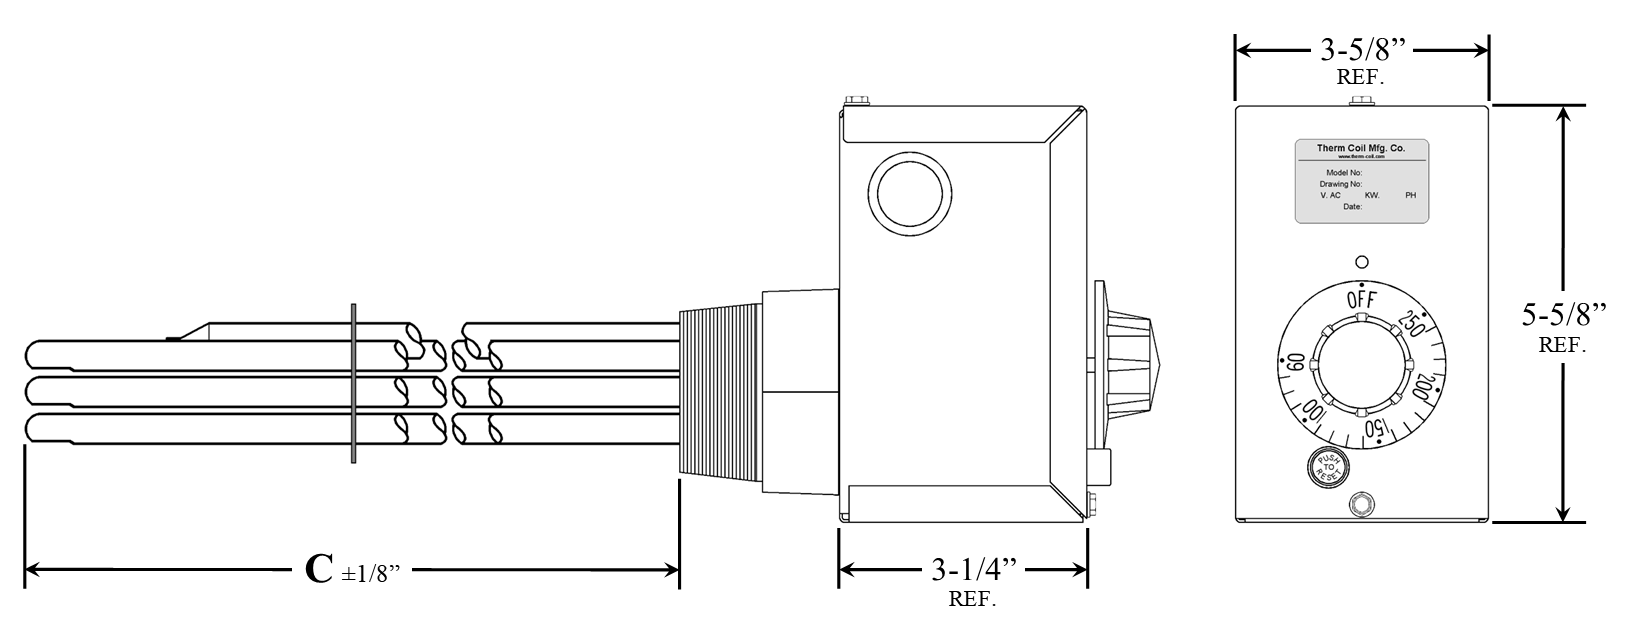 HA-7553 Model: 7500W @ 480V 3-Phase, 19" Immersion Length Regulated 2" NPT Commercial Dishwasher Heating Elements